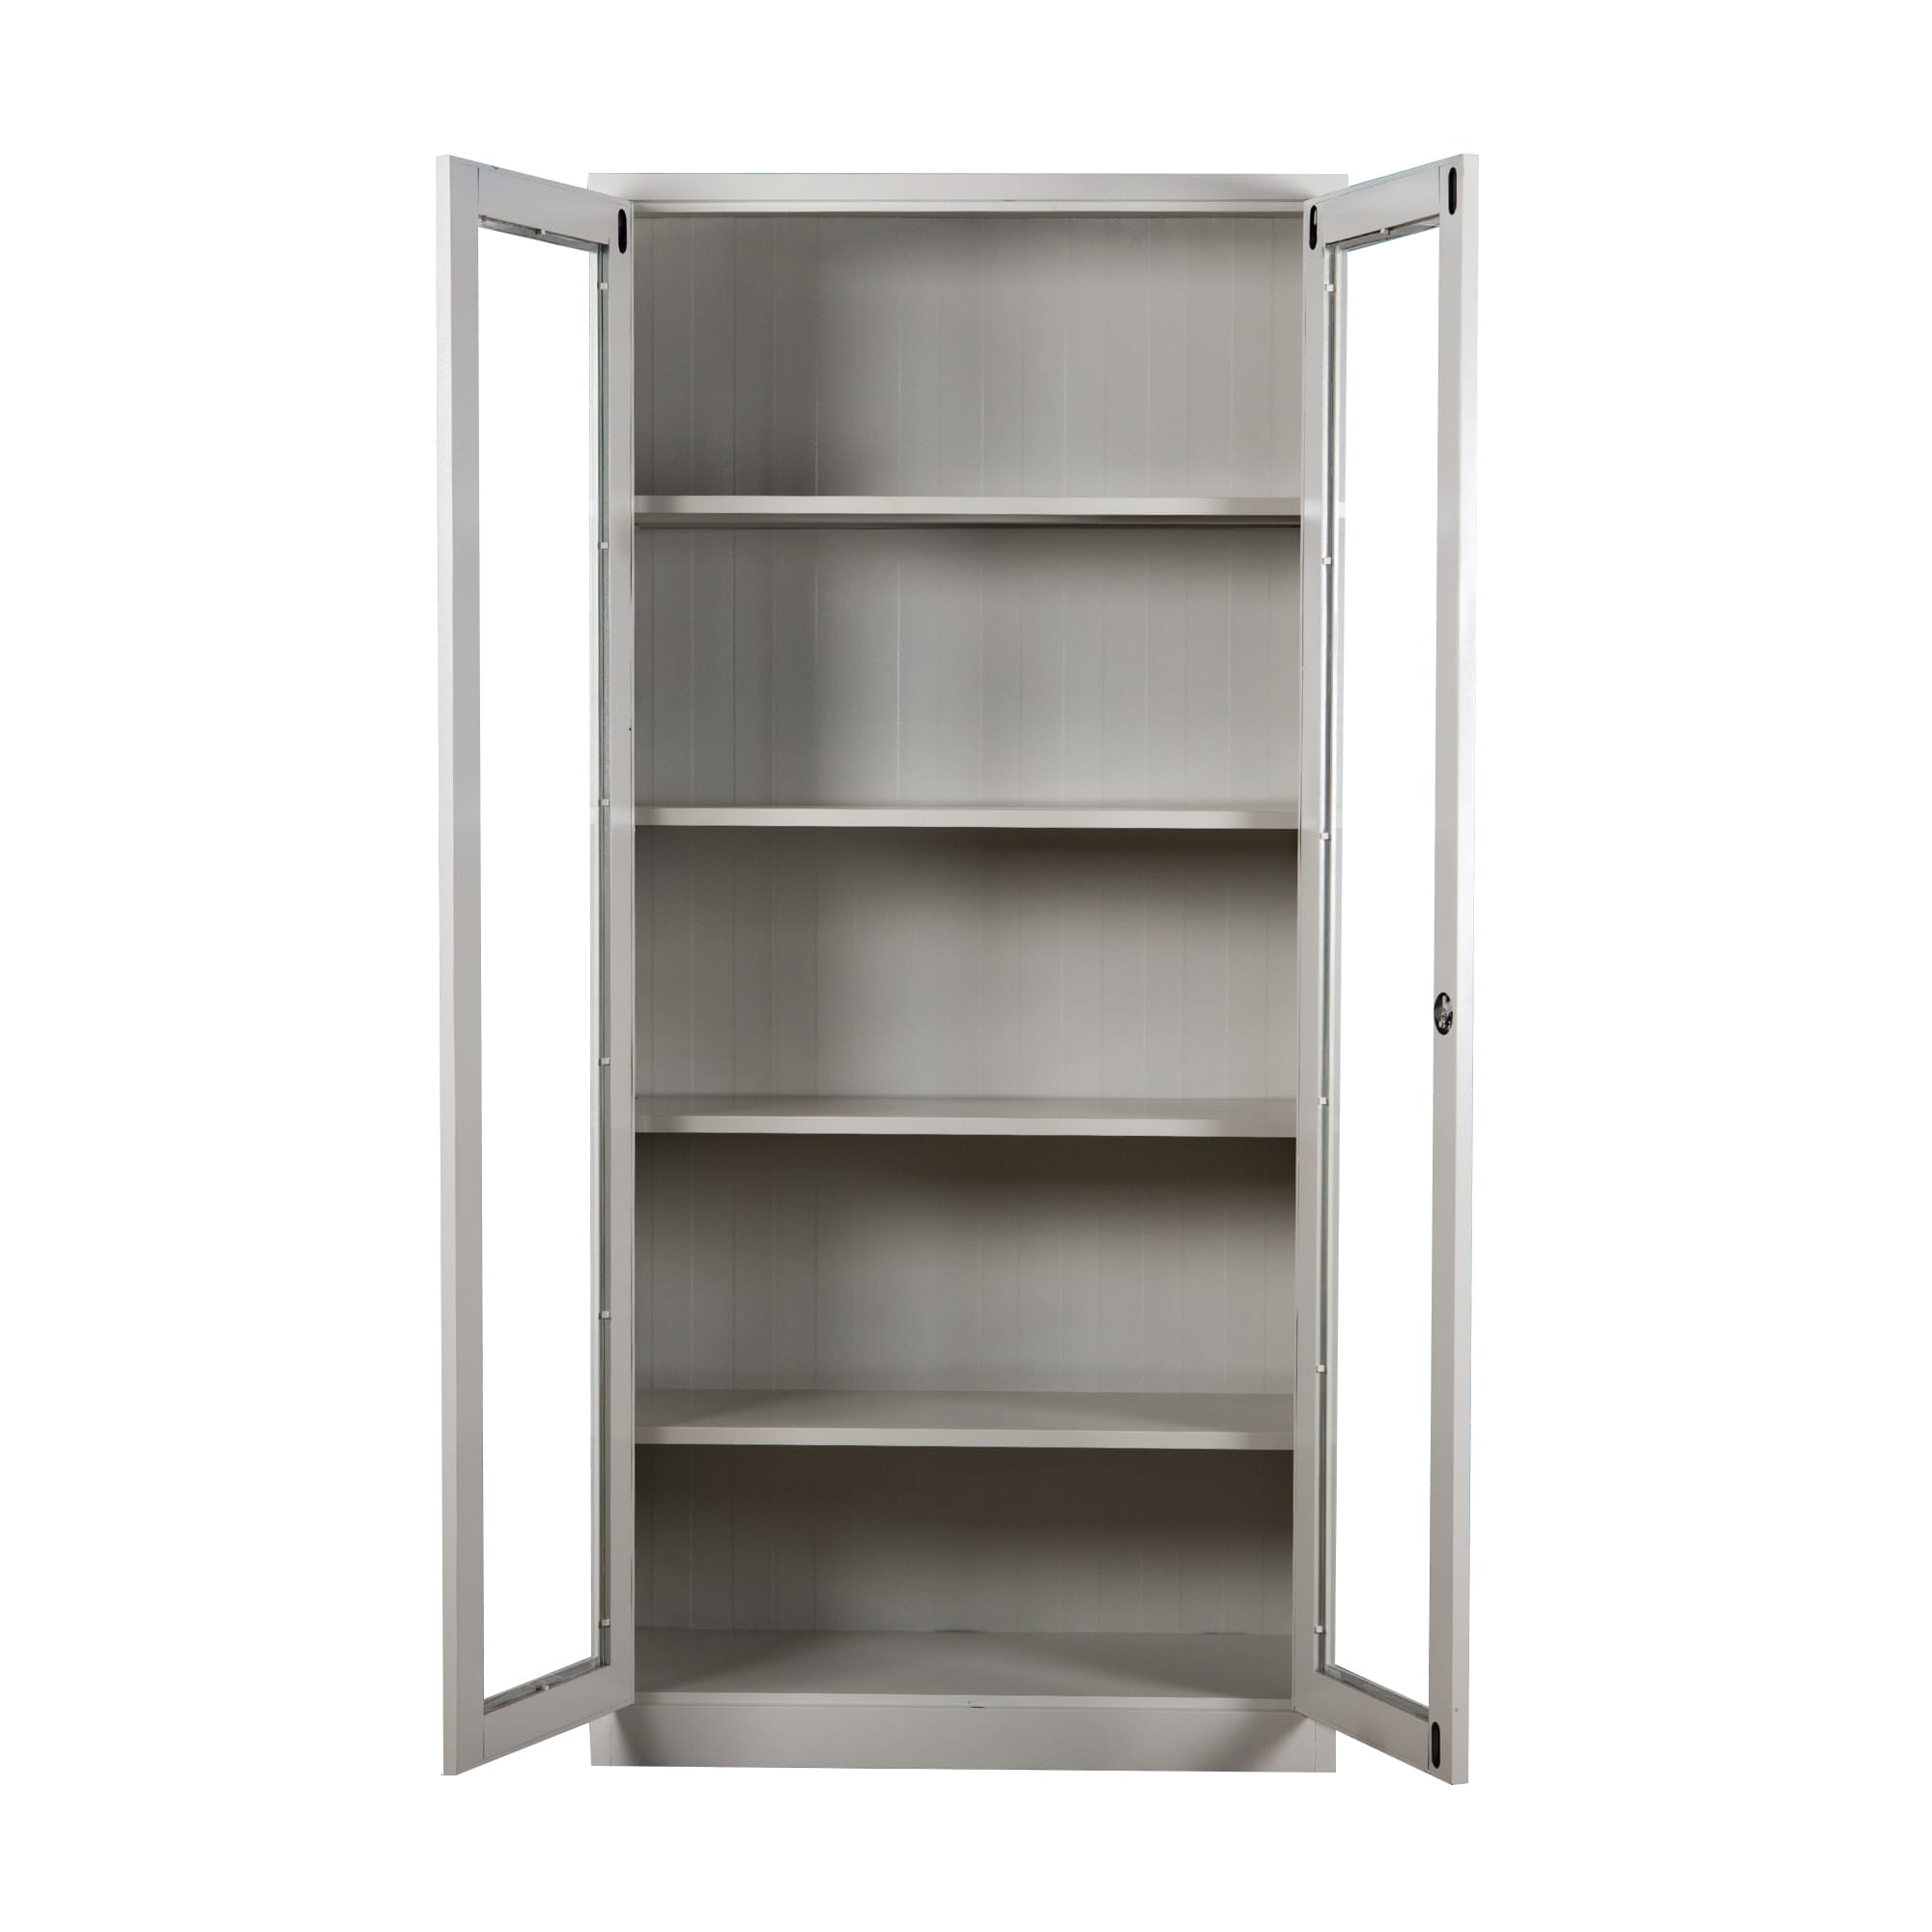 Steel File Cabinet with Glass Door 5 shelves - BAS Kuwait